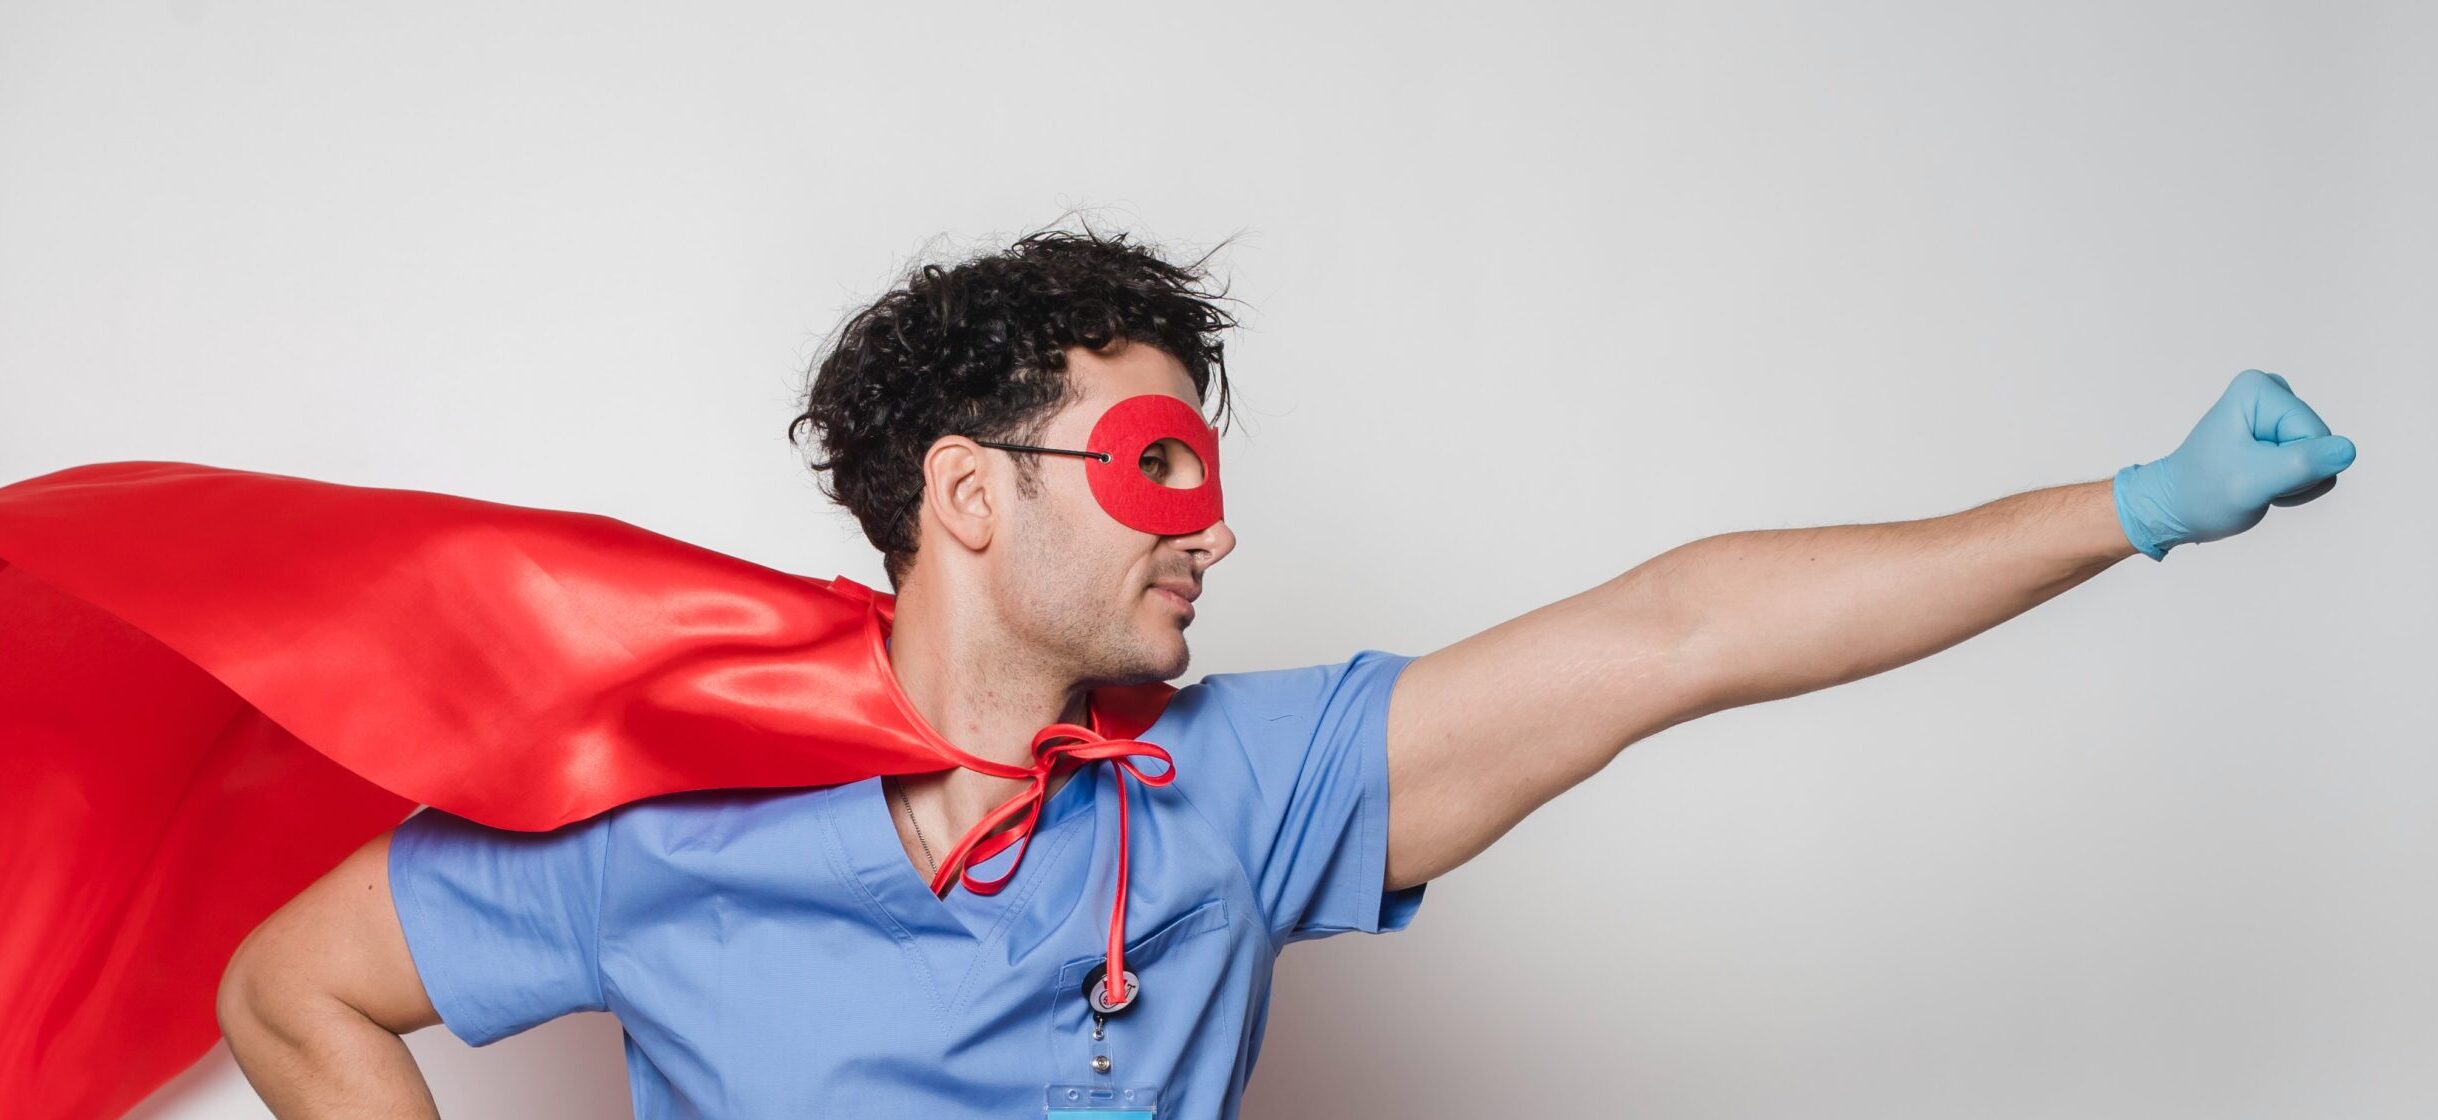 man in scrubs wearing superhero costume